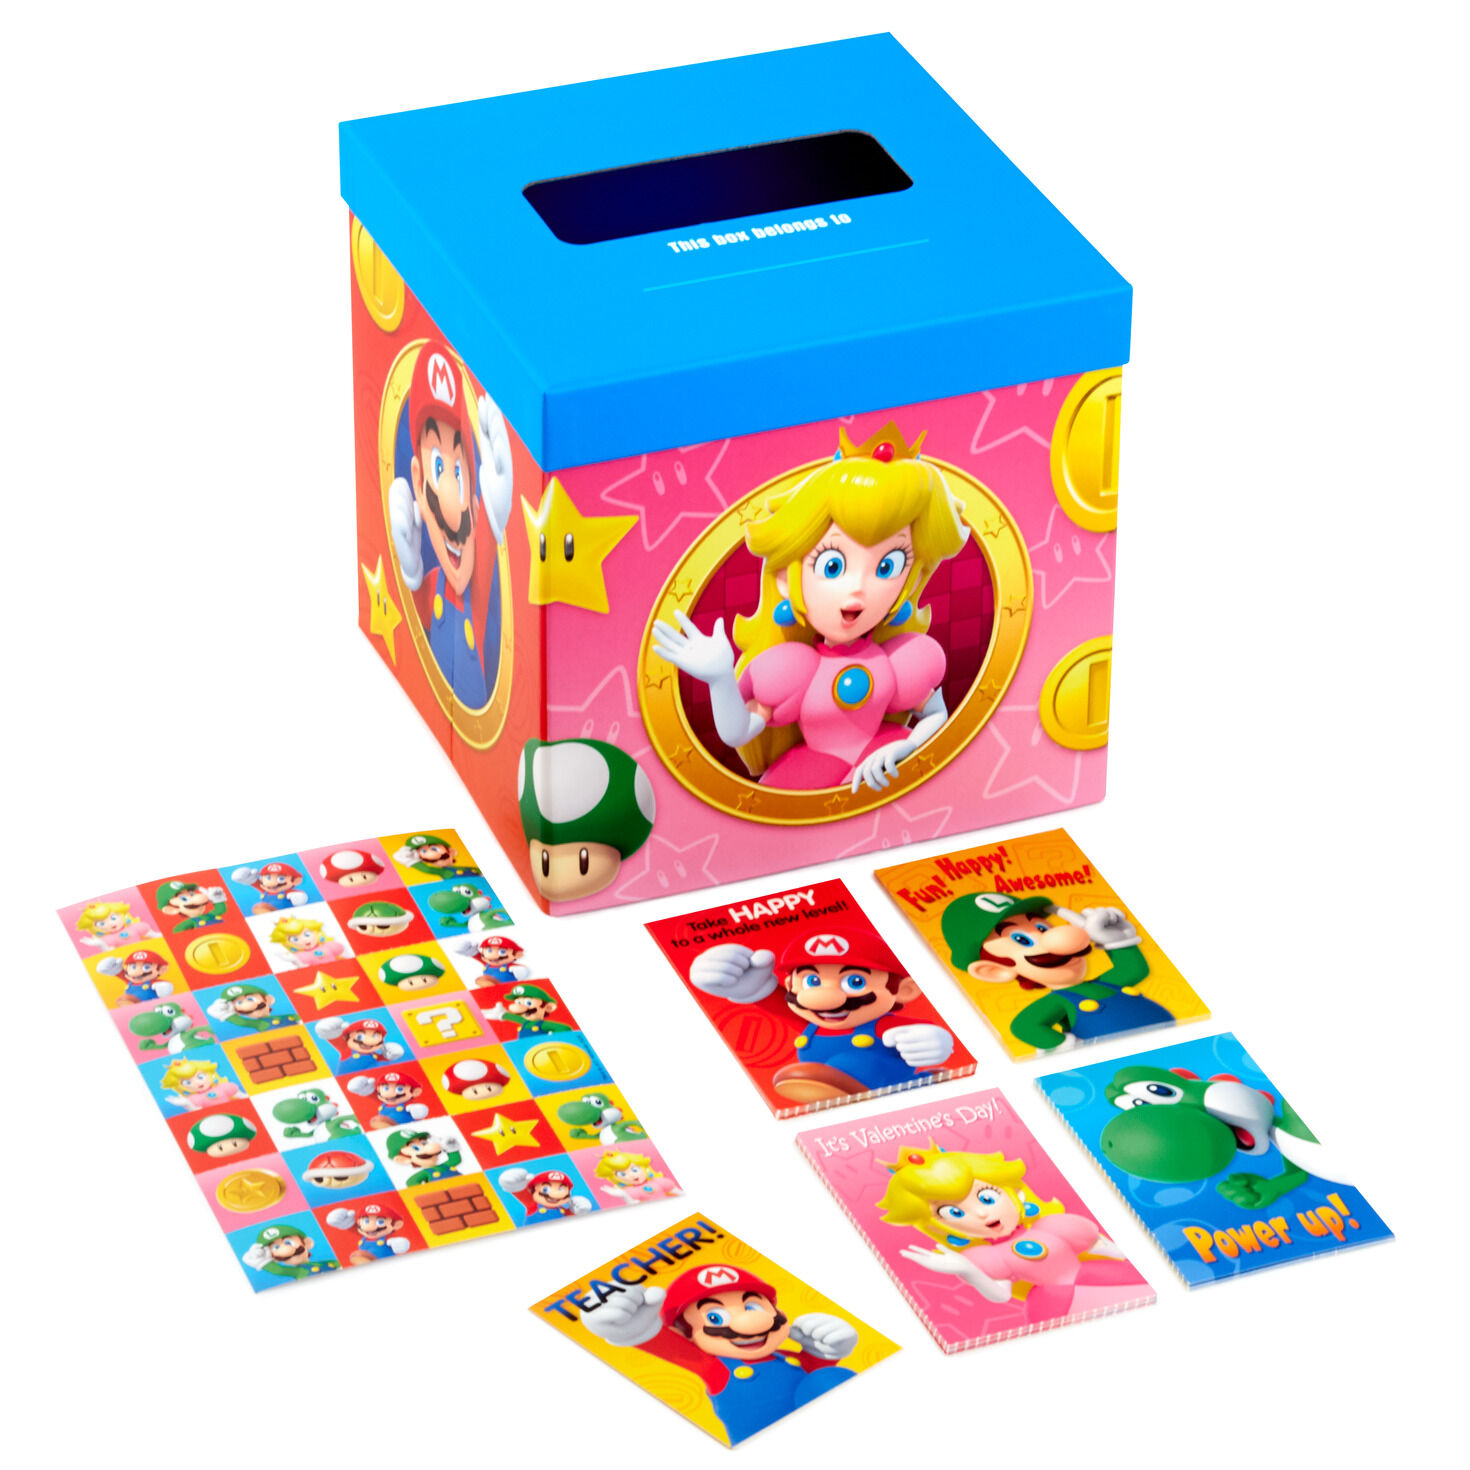 Nintendo super marioâ kids classroom valentines set with cards stickers and mailbox